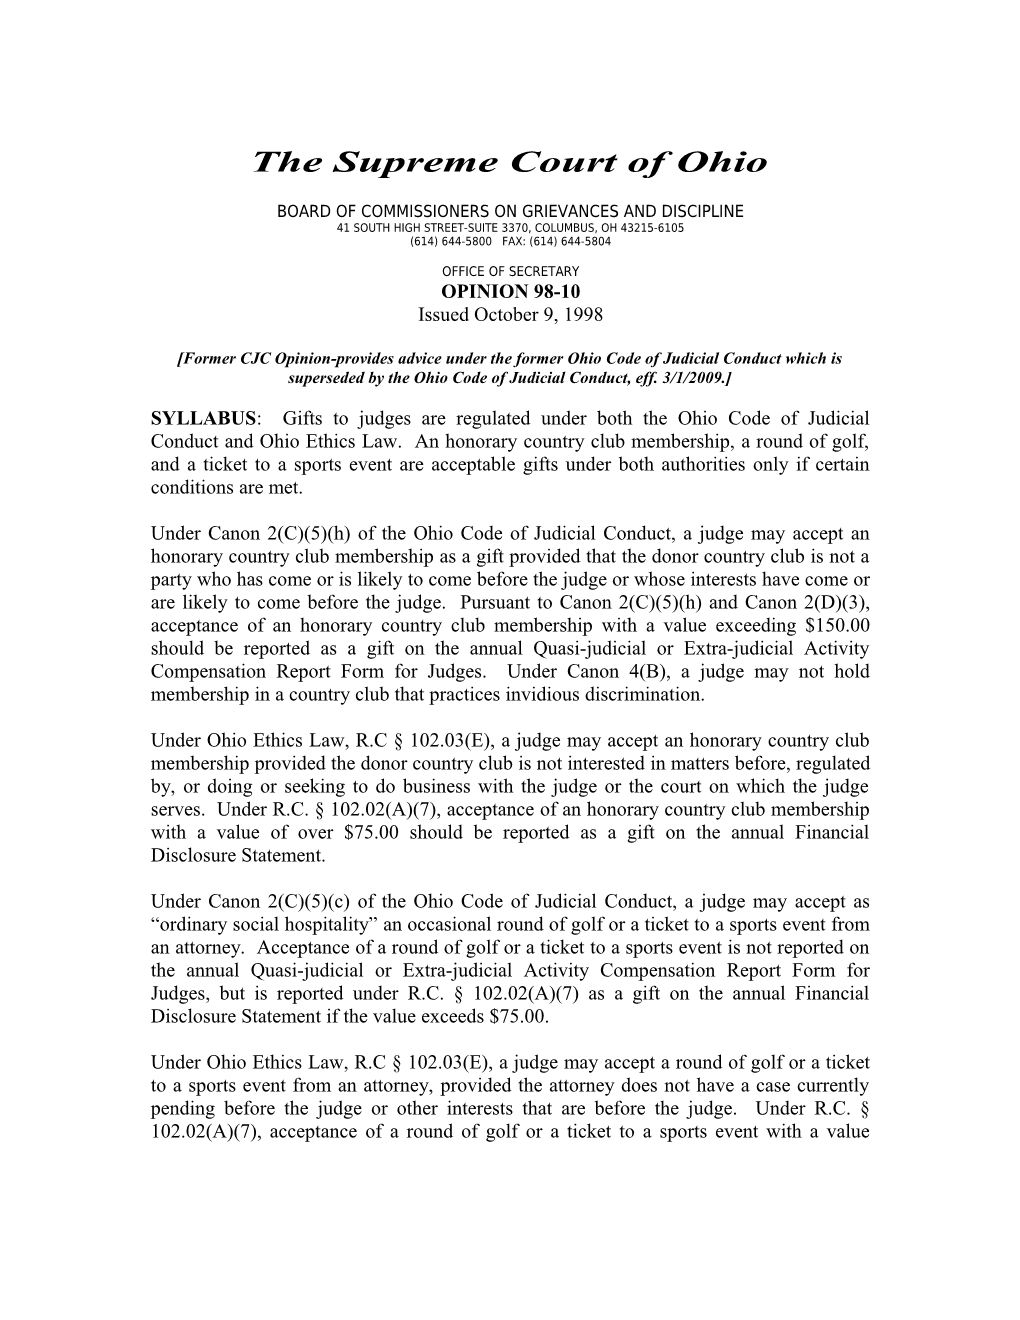 The Supreme Court of Ohio s19